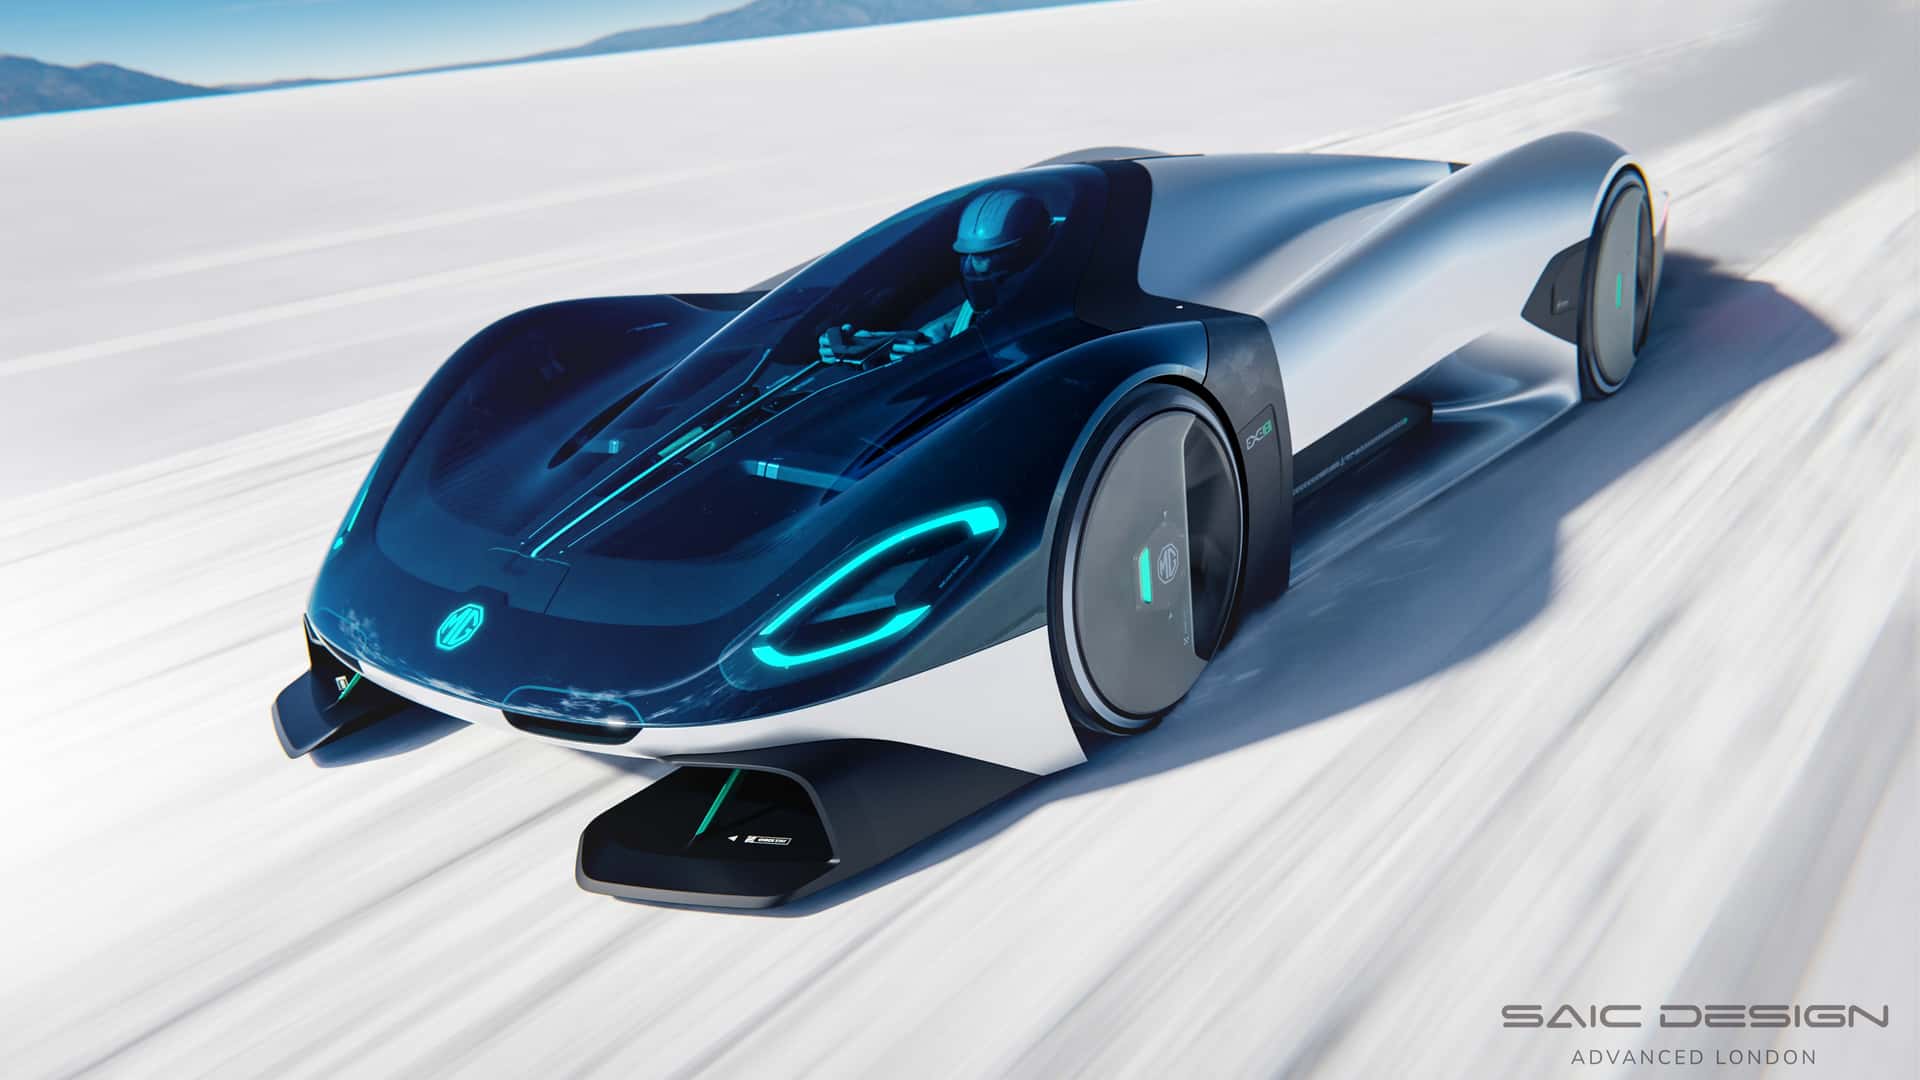 MGが未来的な「EXE181」コンセプトを発表し世界最高速記録に挑戦する意向を表明。クワッドモーター搭載のピュアエレクトリックカー、空気抵抗係数は0.181